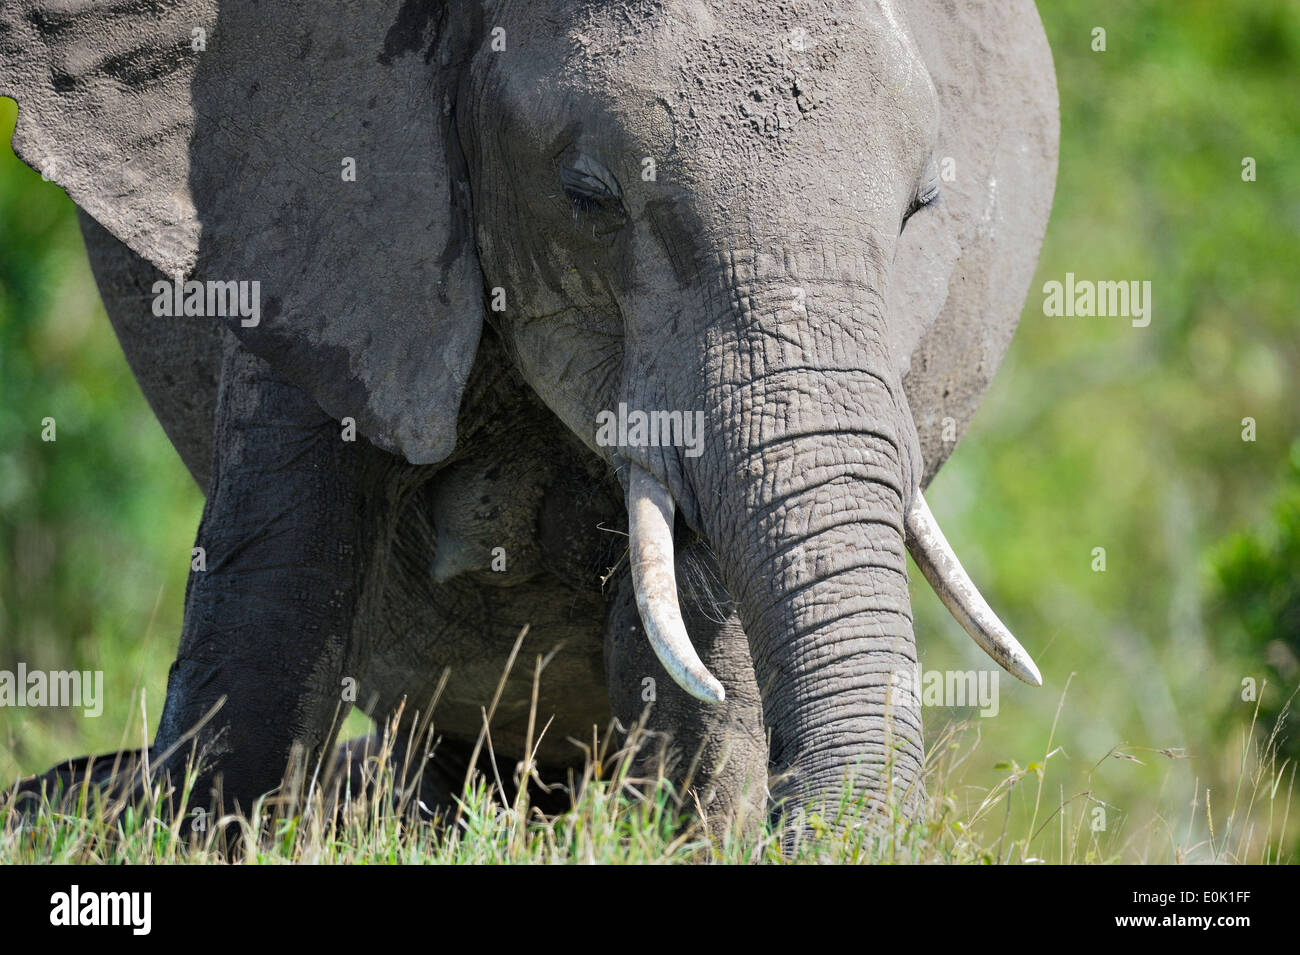 Elephant frontal close-up portrait, Masai Mara, Kenya Stock Photo